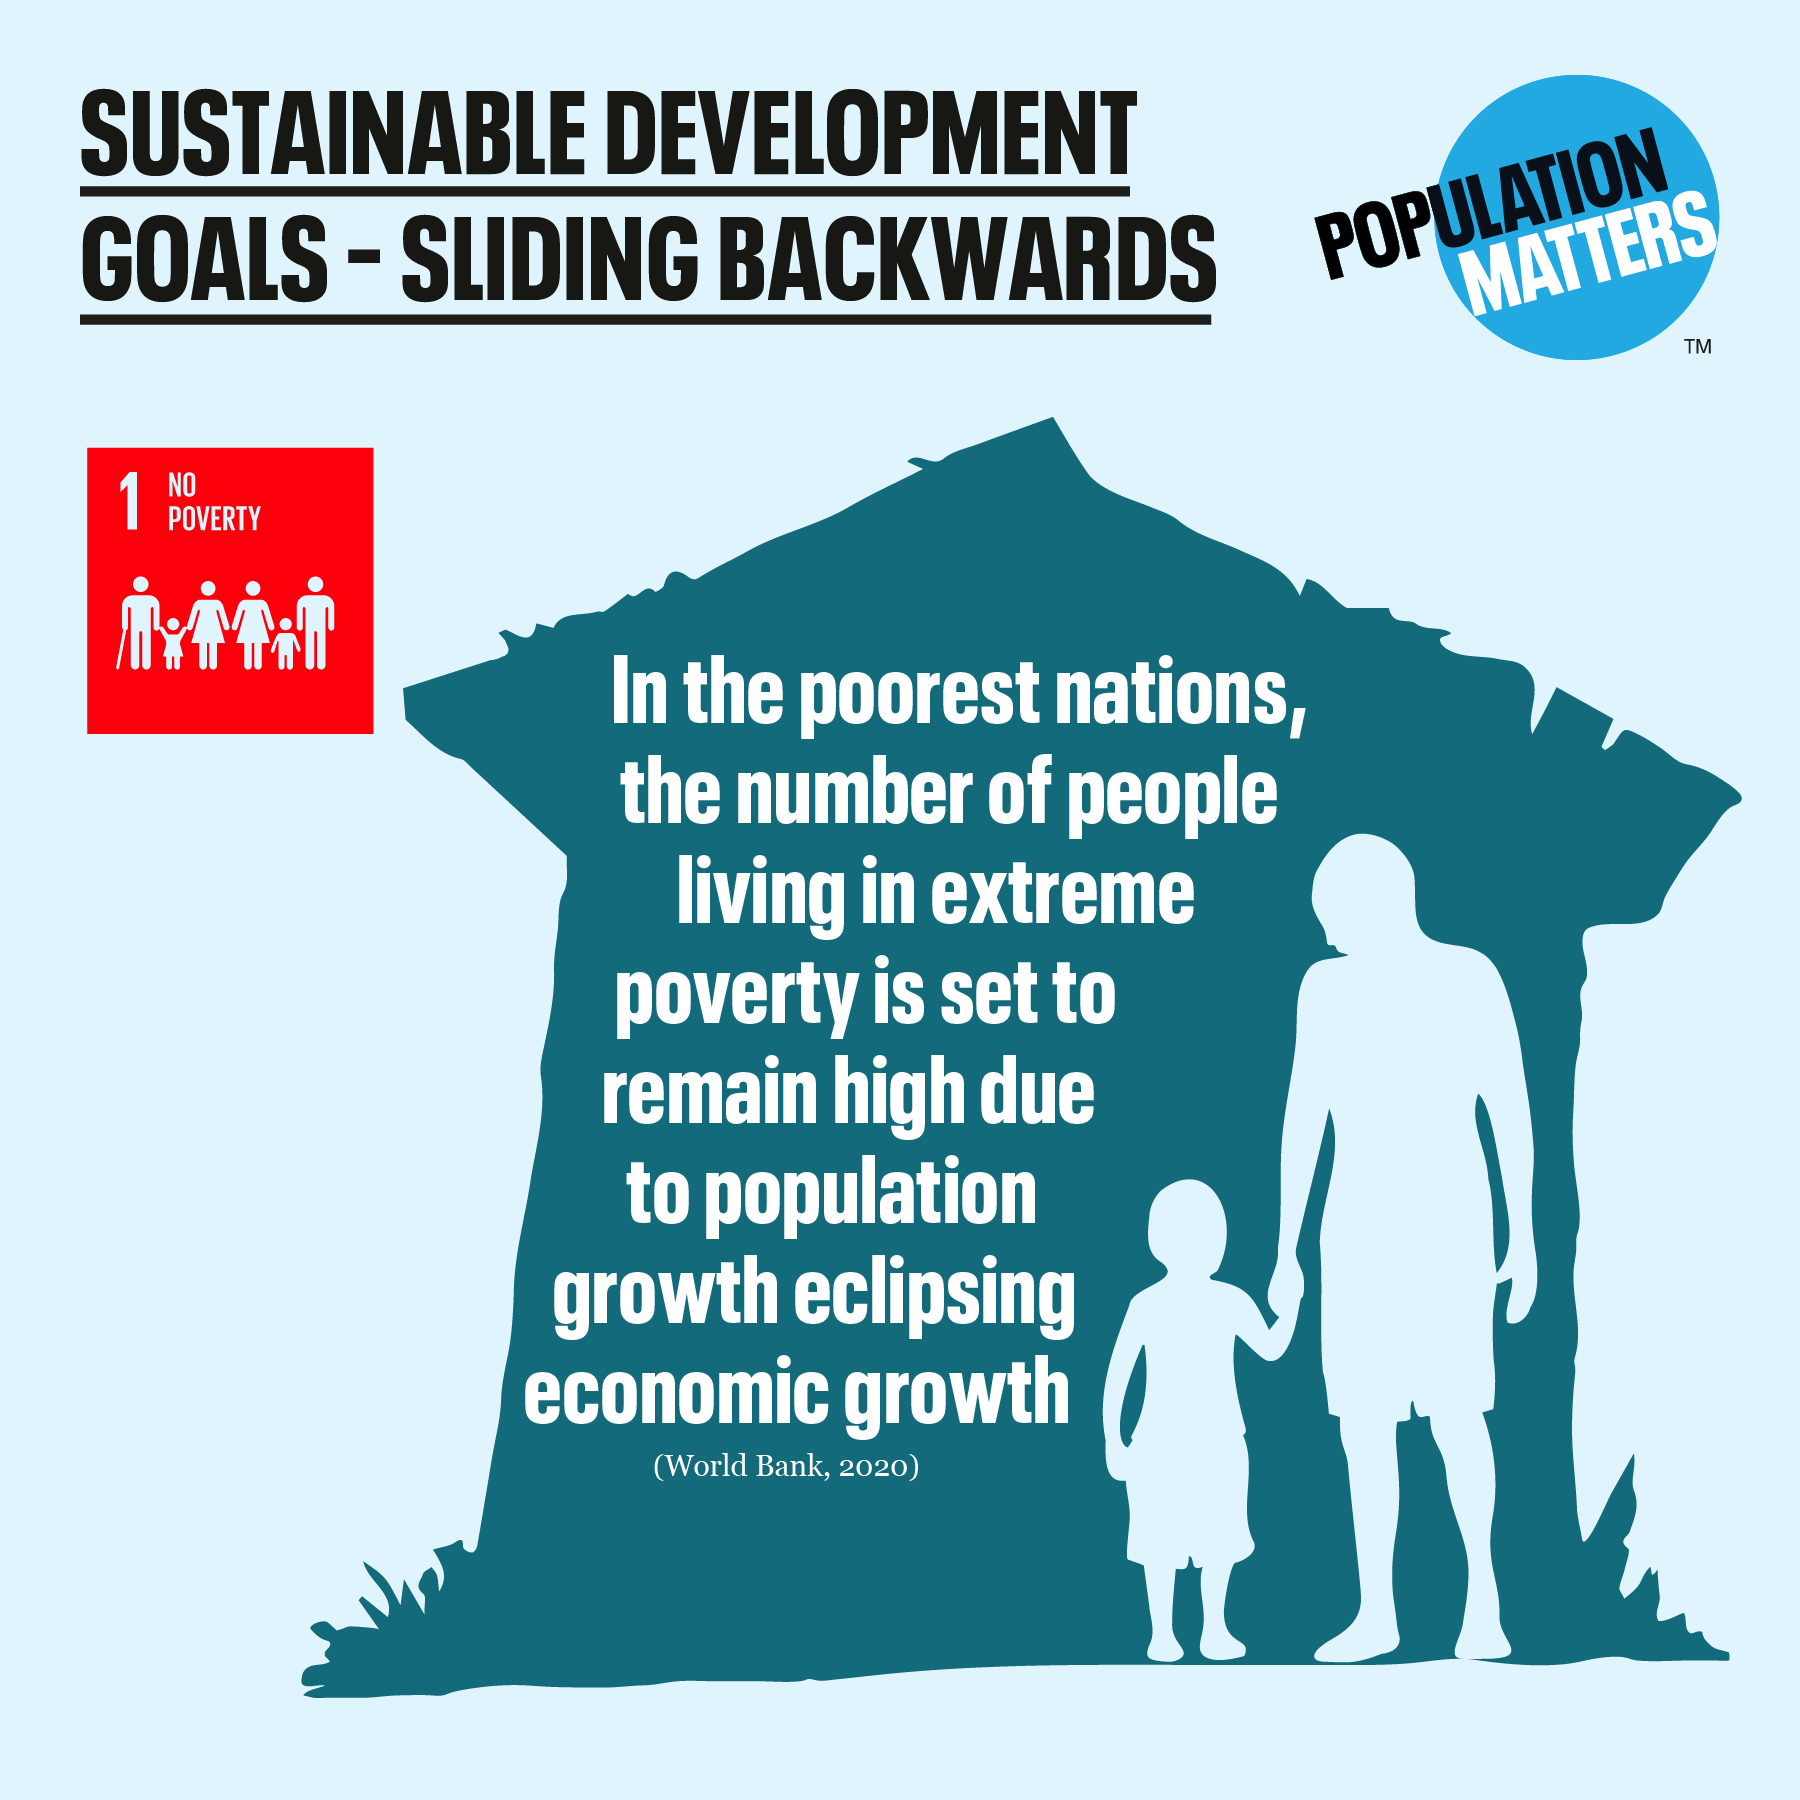 SDGs sliding backwards - poverty